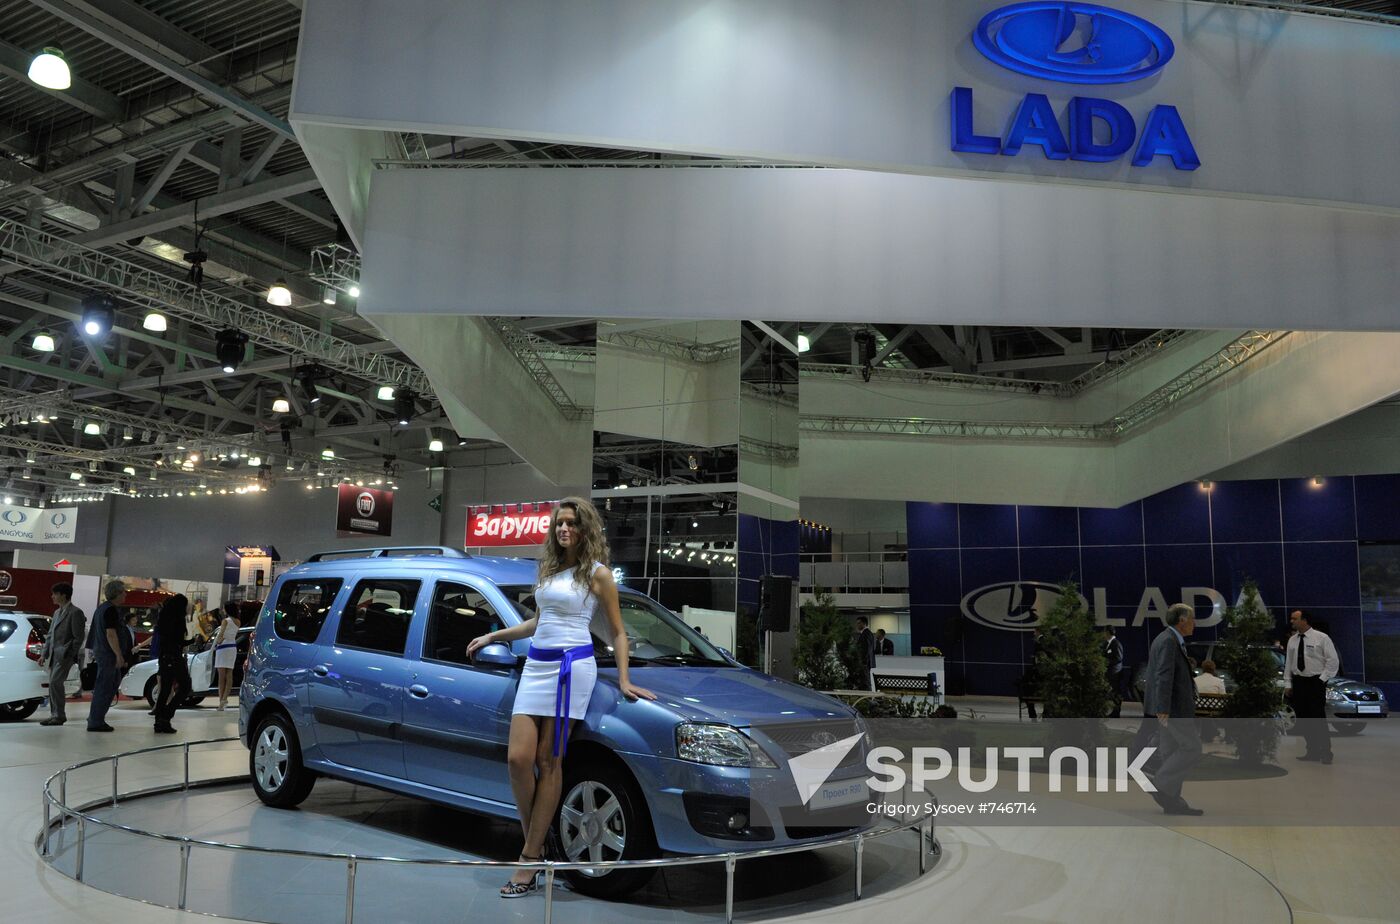 2010 Moscow International Auto Show